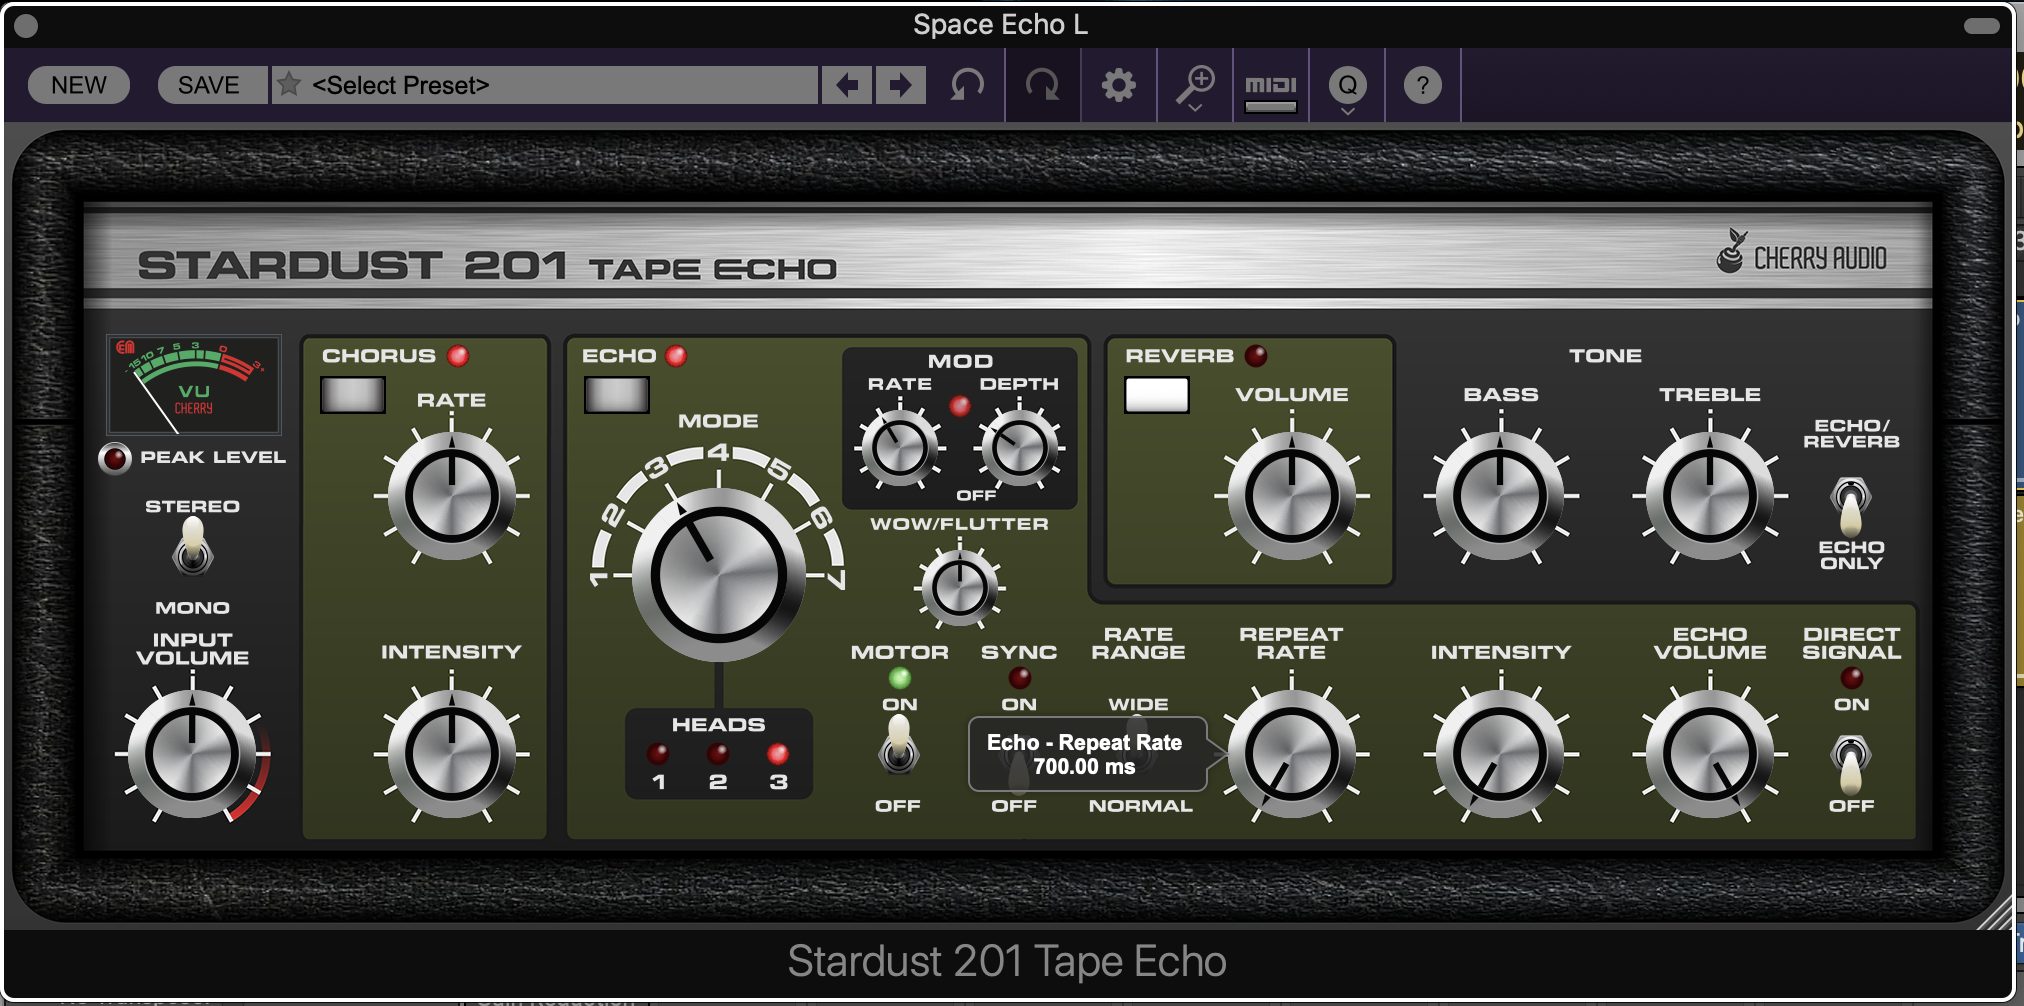 Cherry Audio Stardust 201 Tape Echo screenshot 001.png